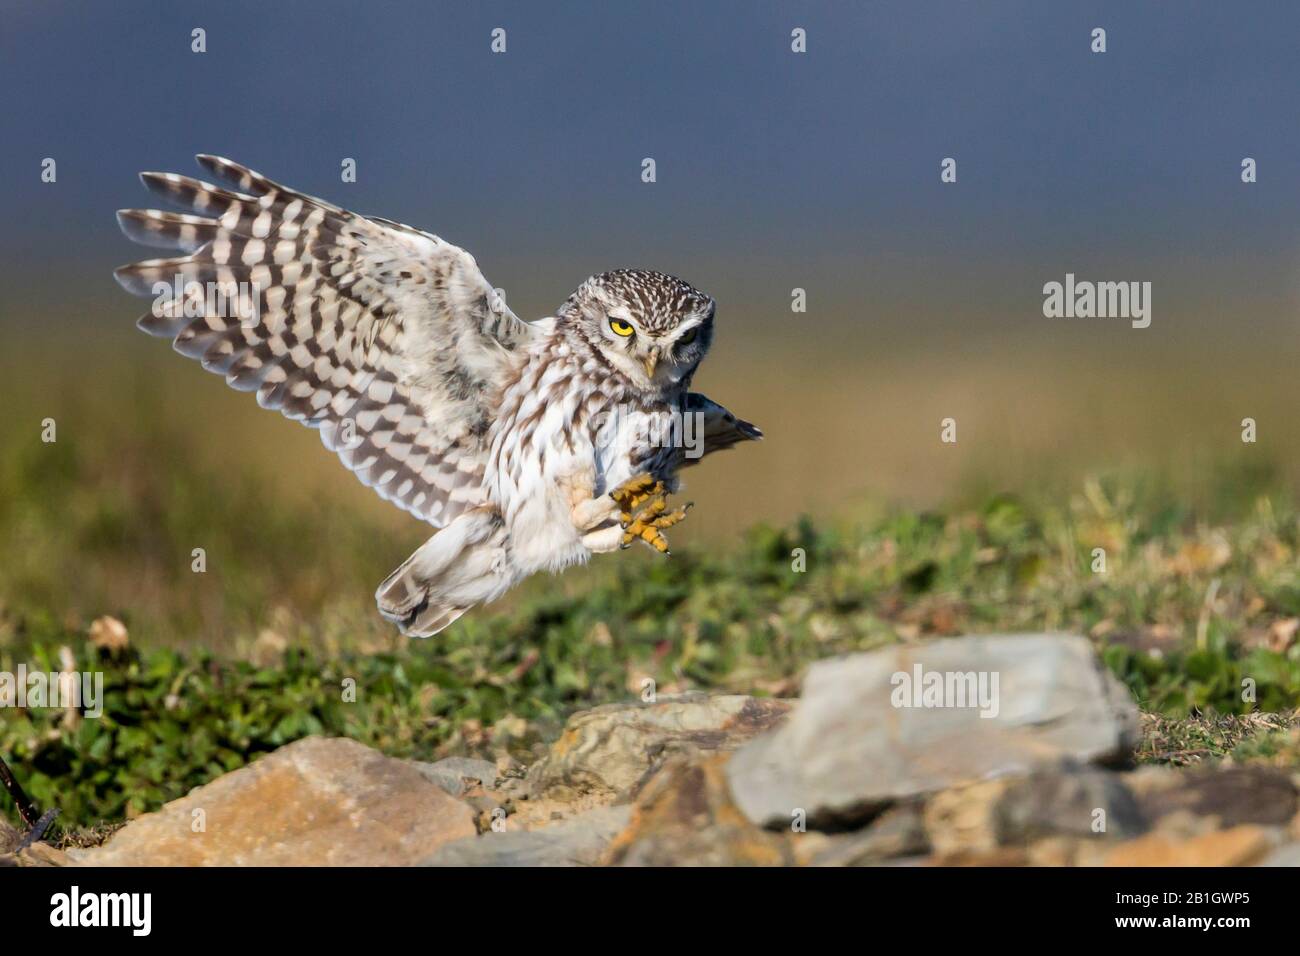 West European Little Owl (Athene noctua vidalii, Athene vidalii), male in flight, Spain Stock Photo